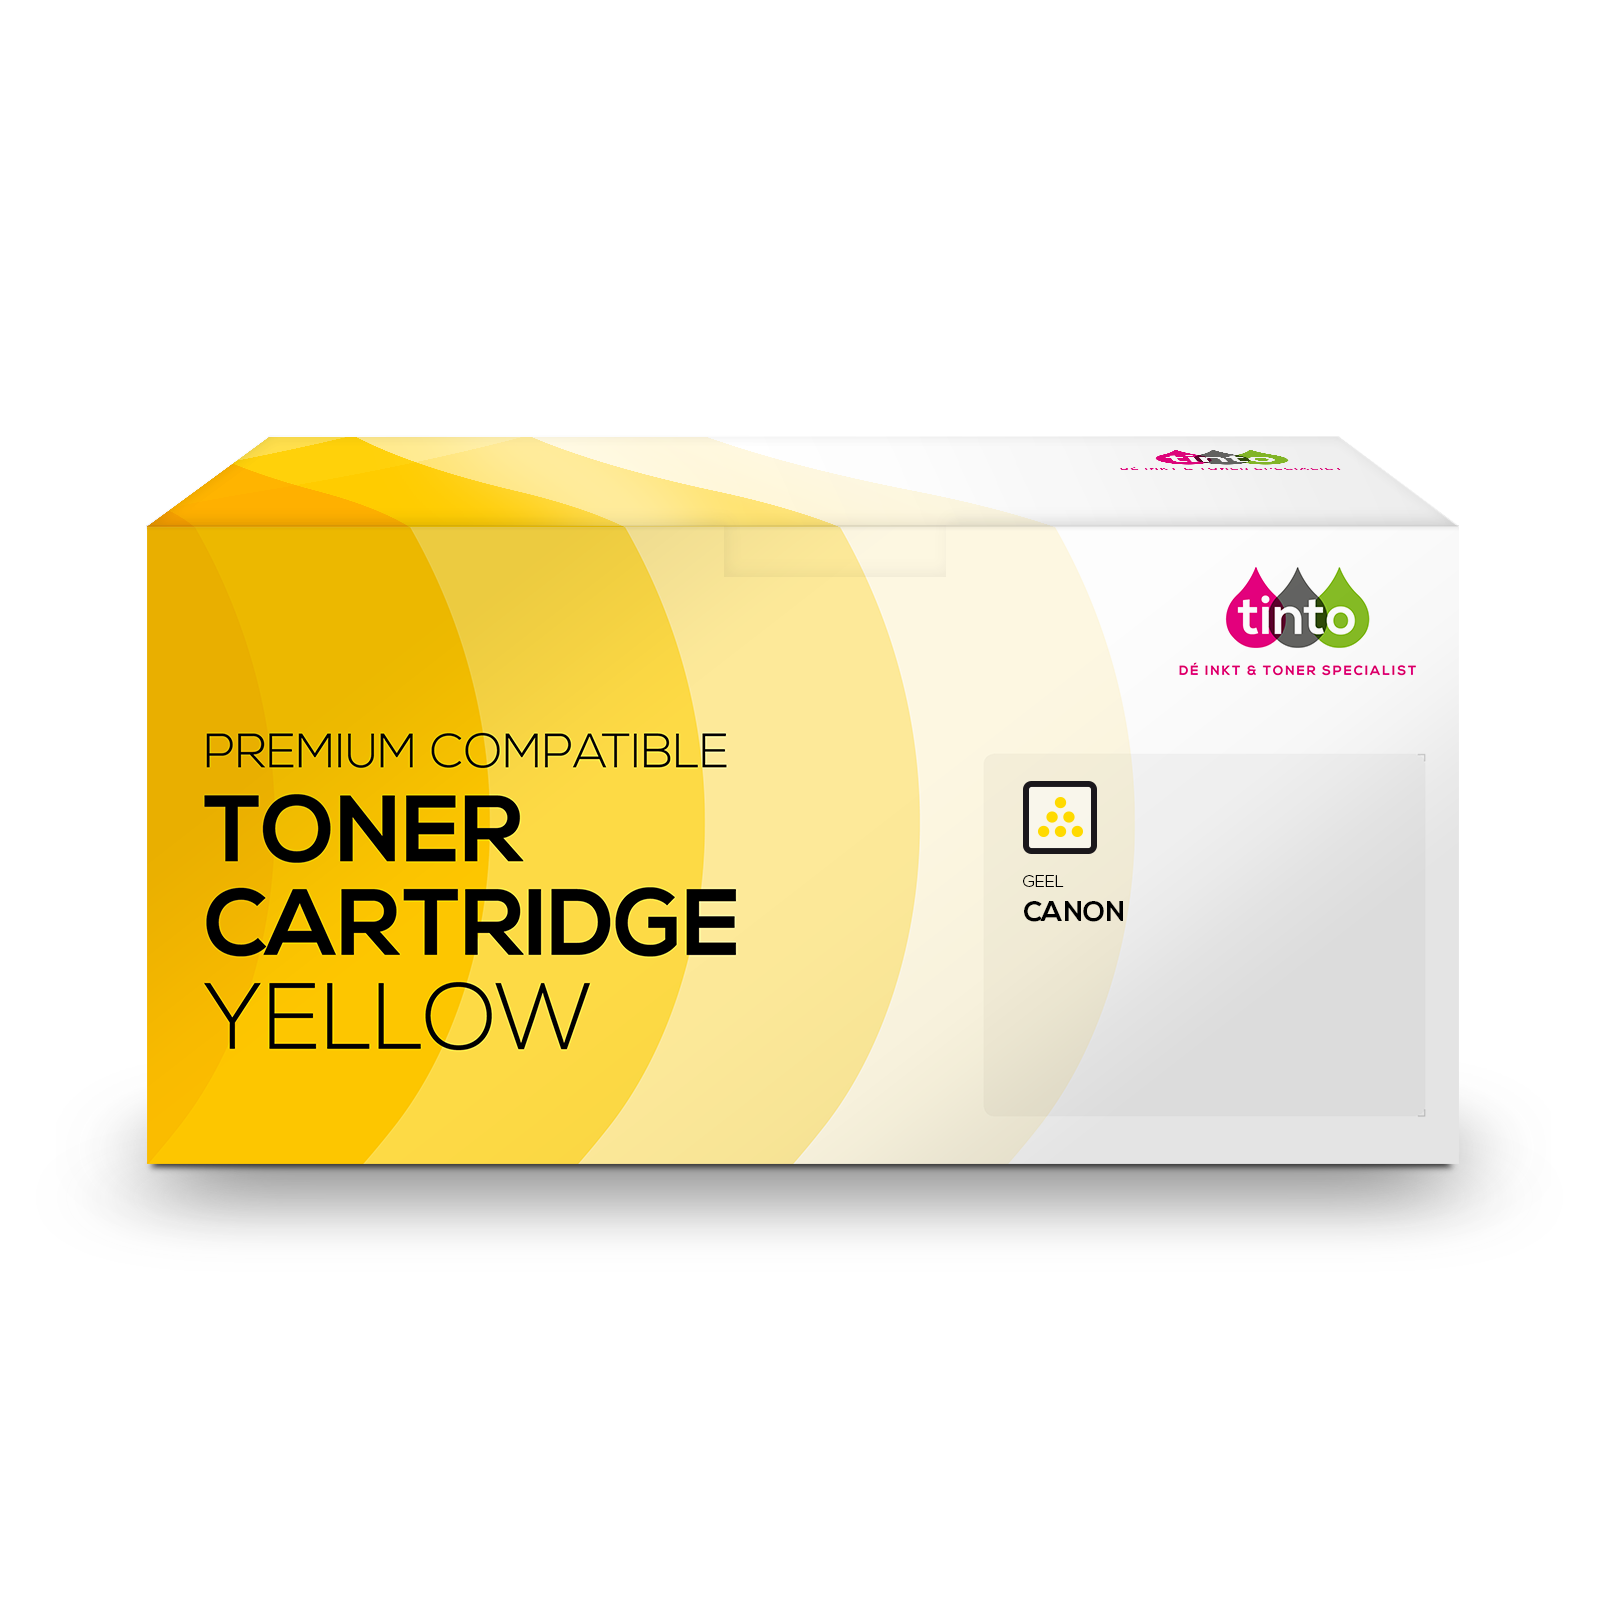 Canon 707 Toner Yellow | Tinto huismerk